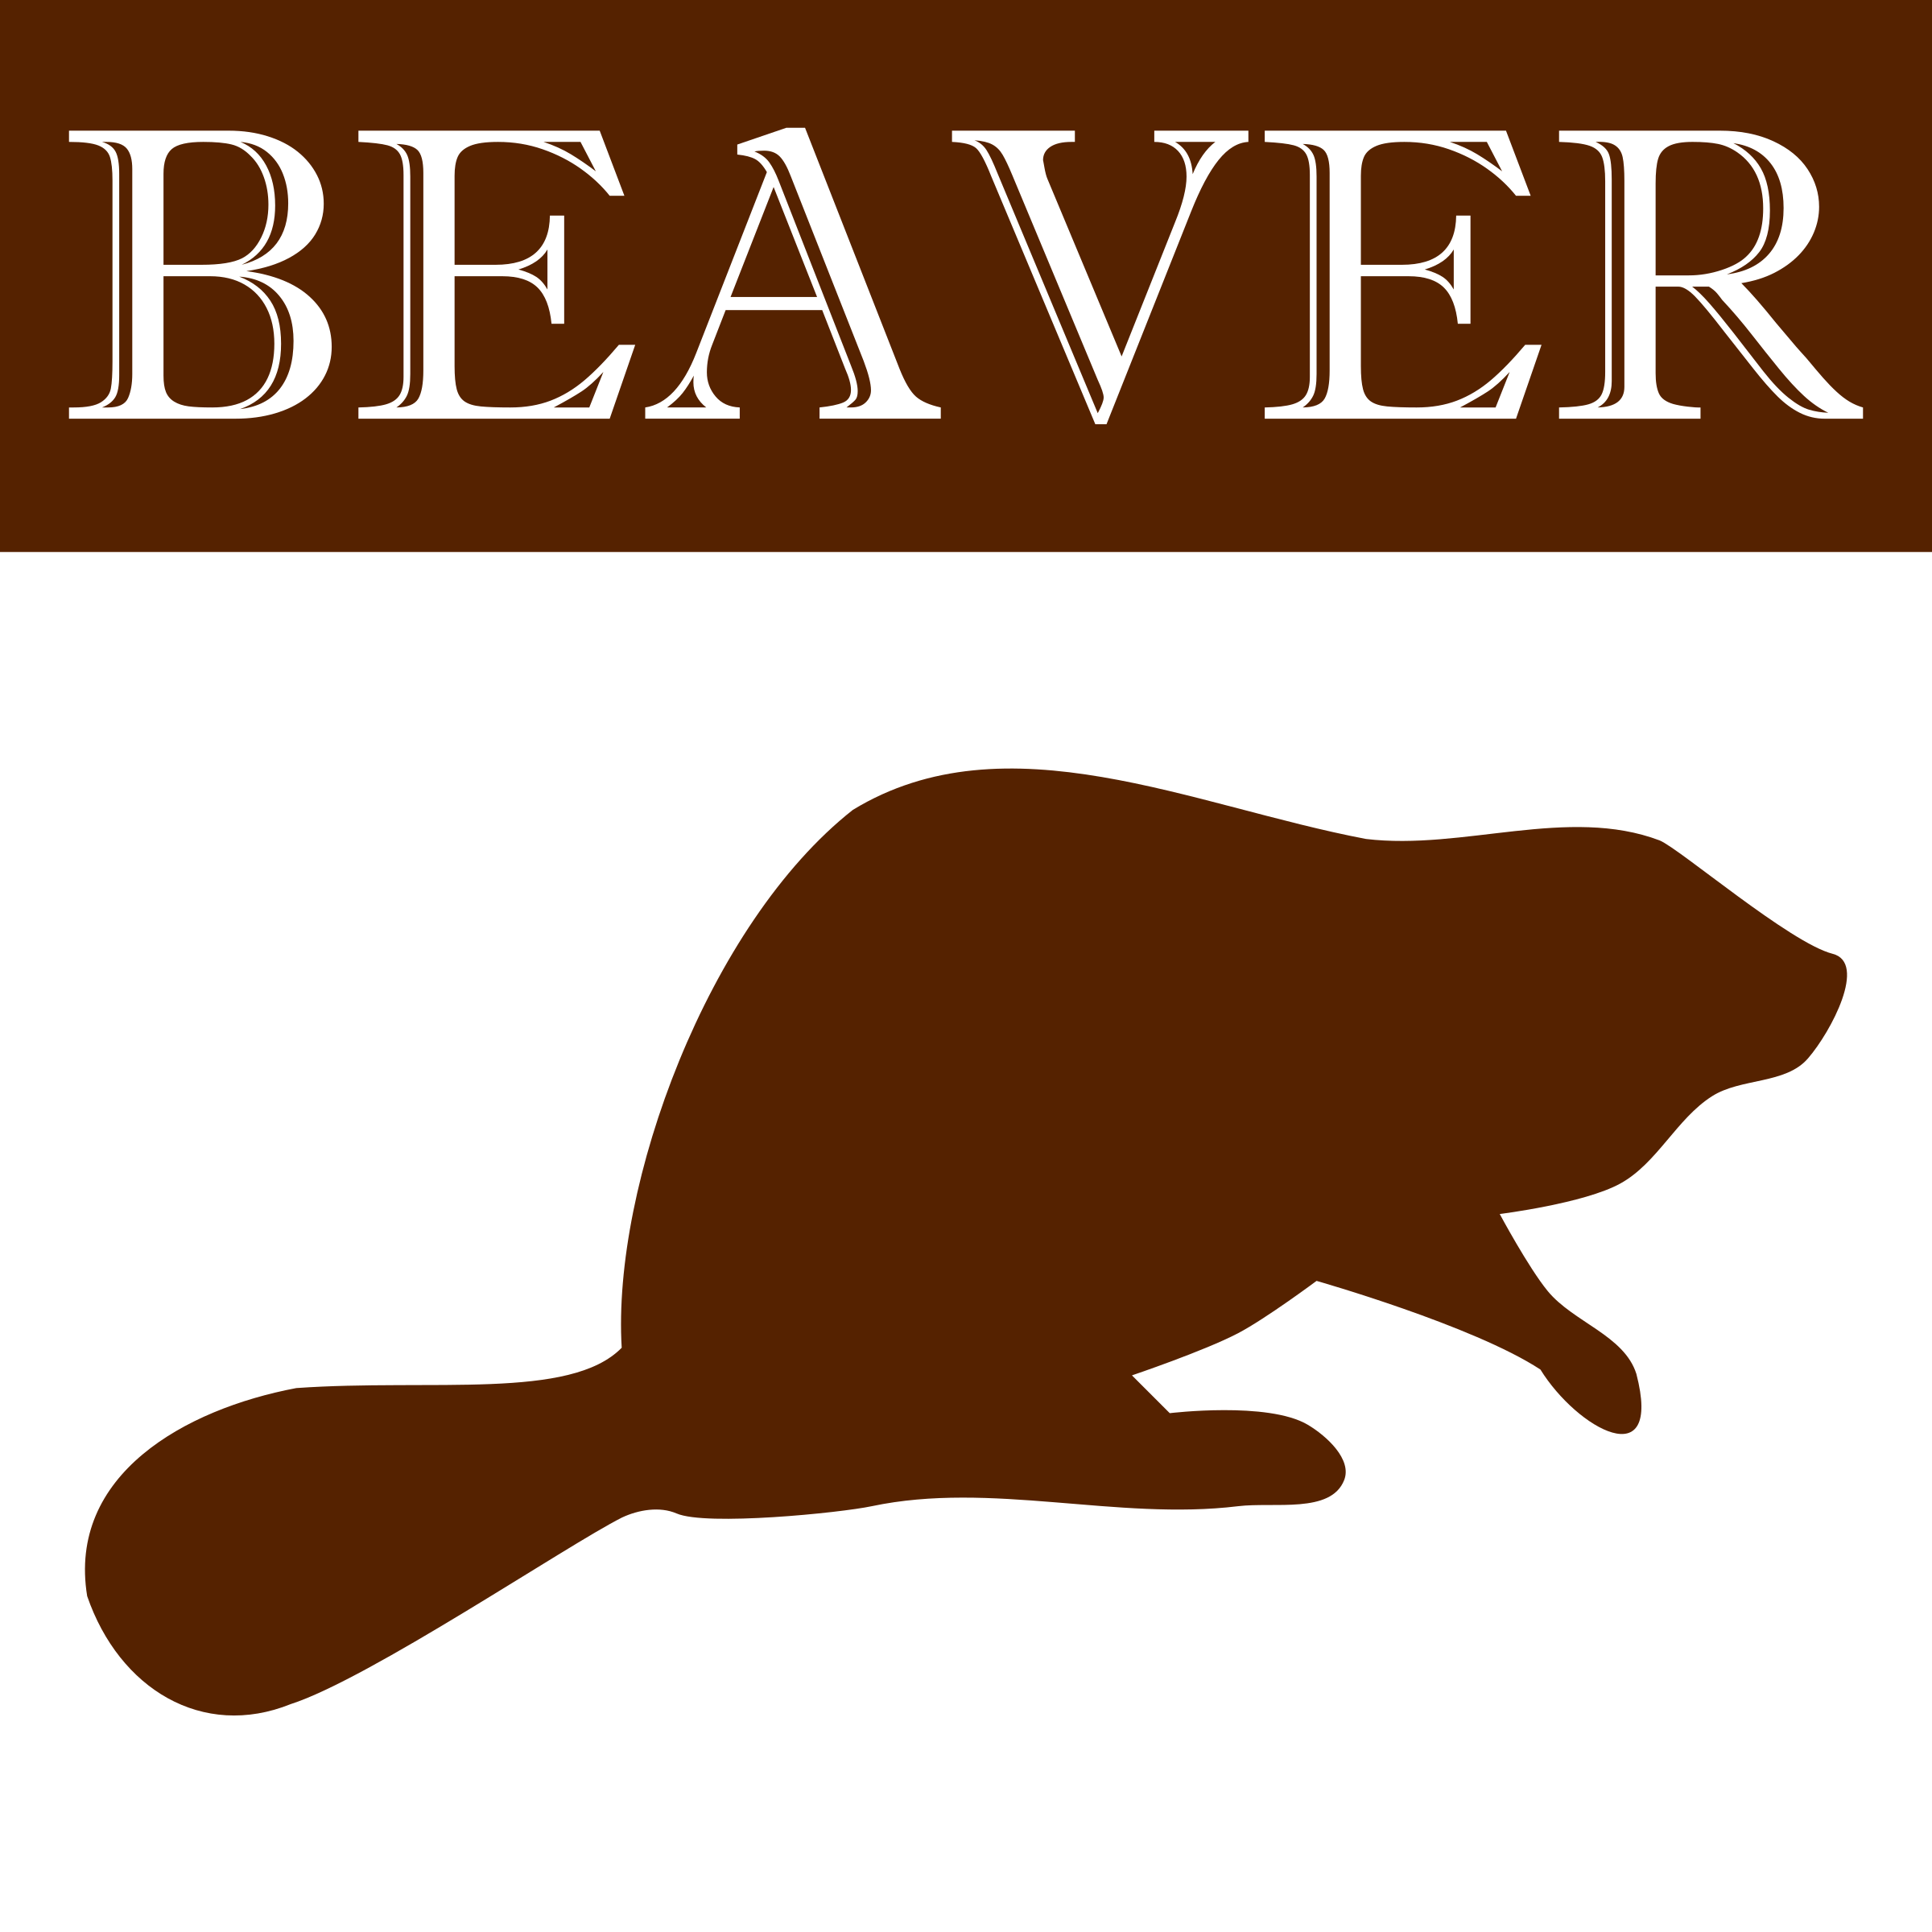 Clipart - Beaver silhouette icon